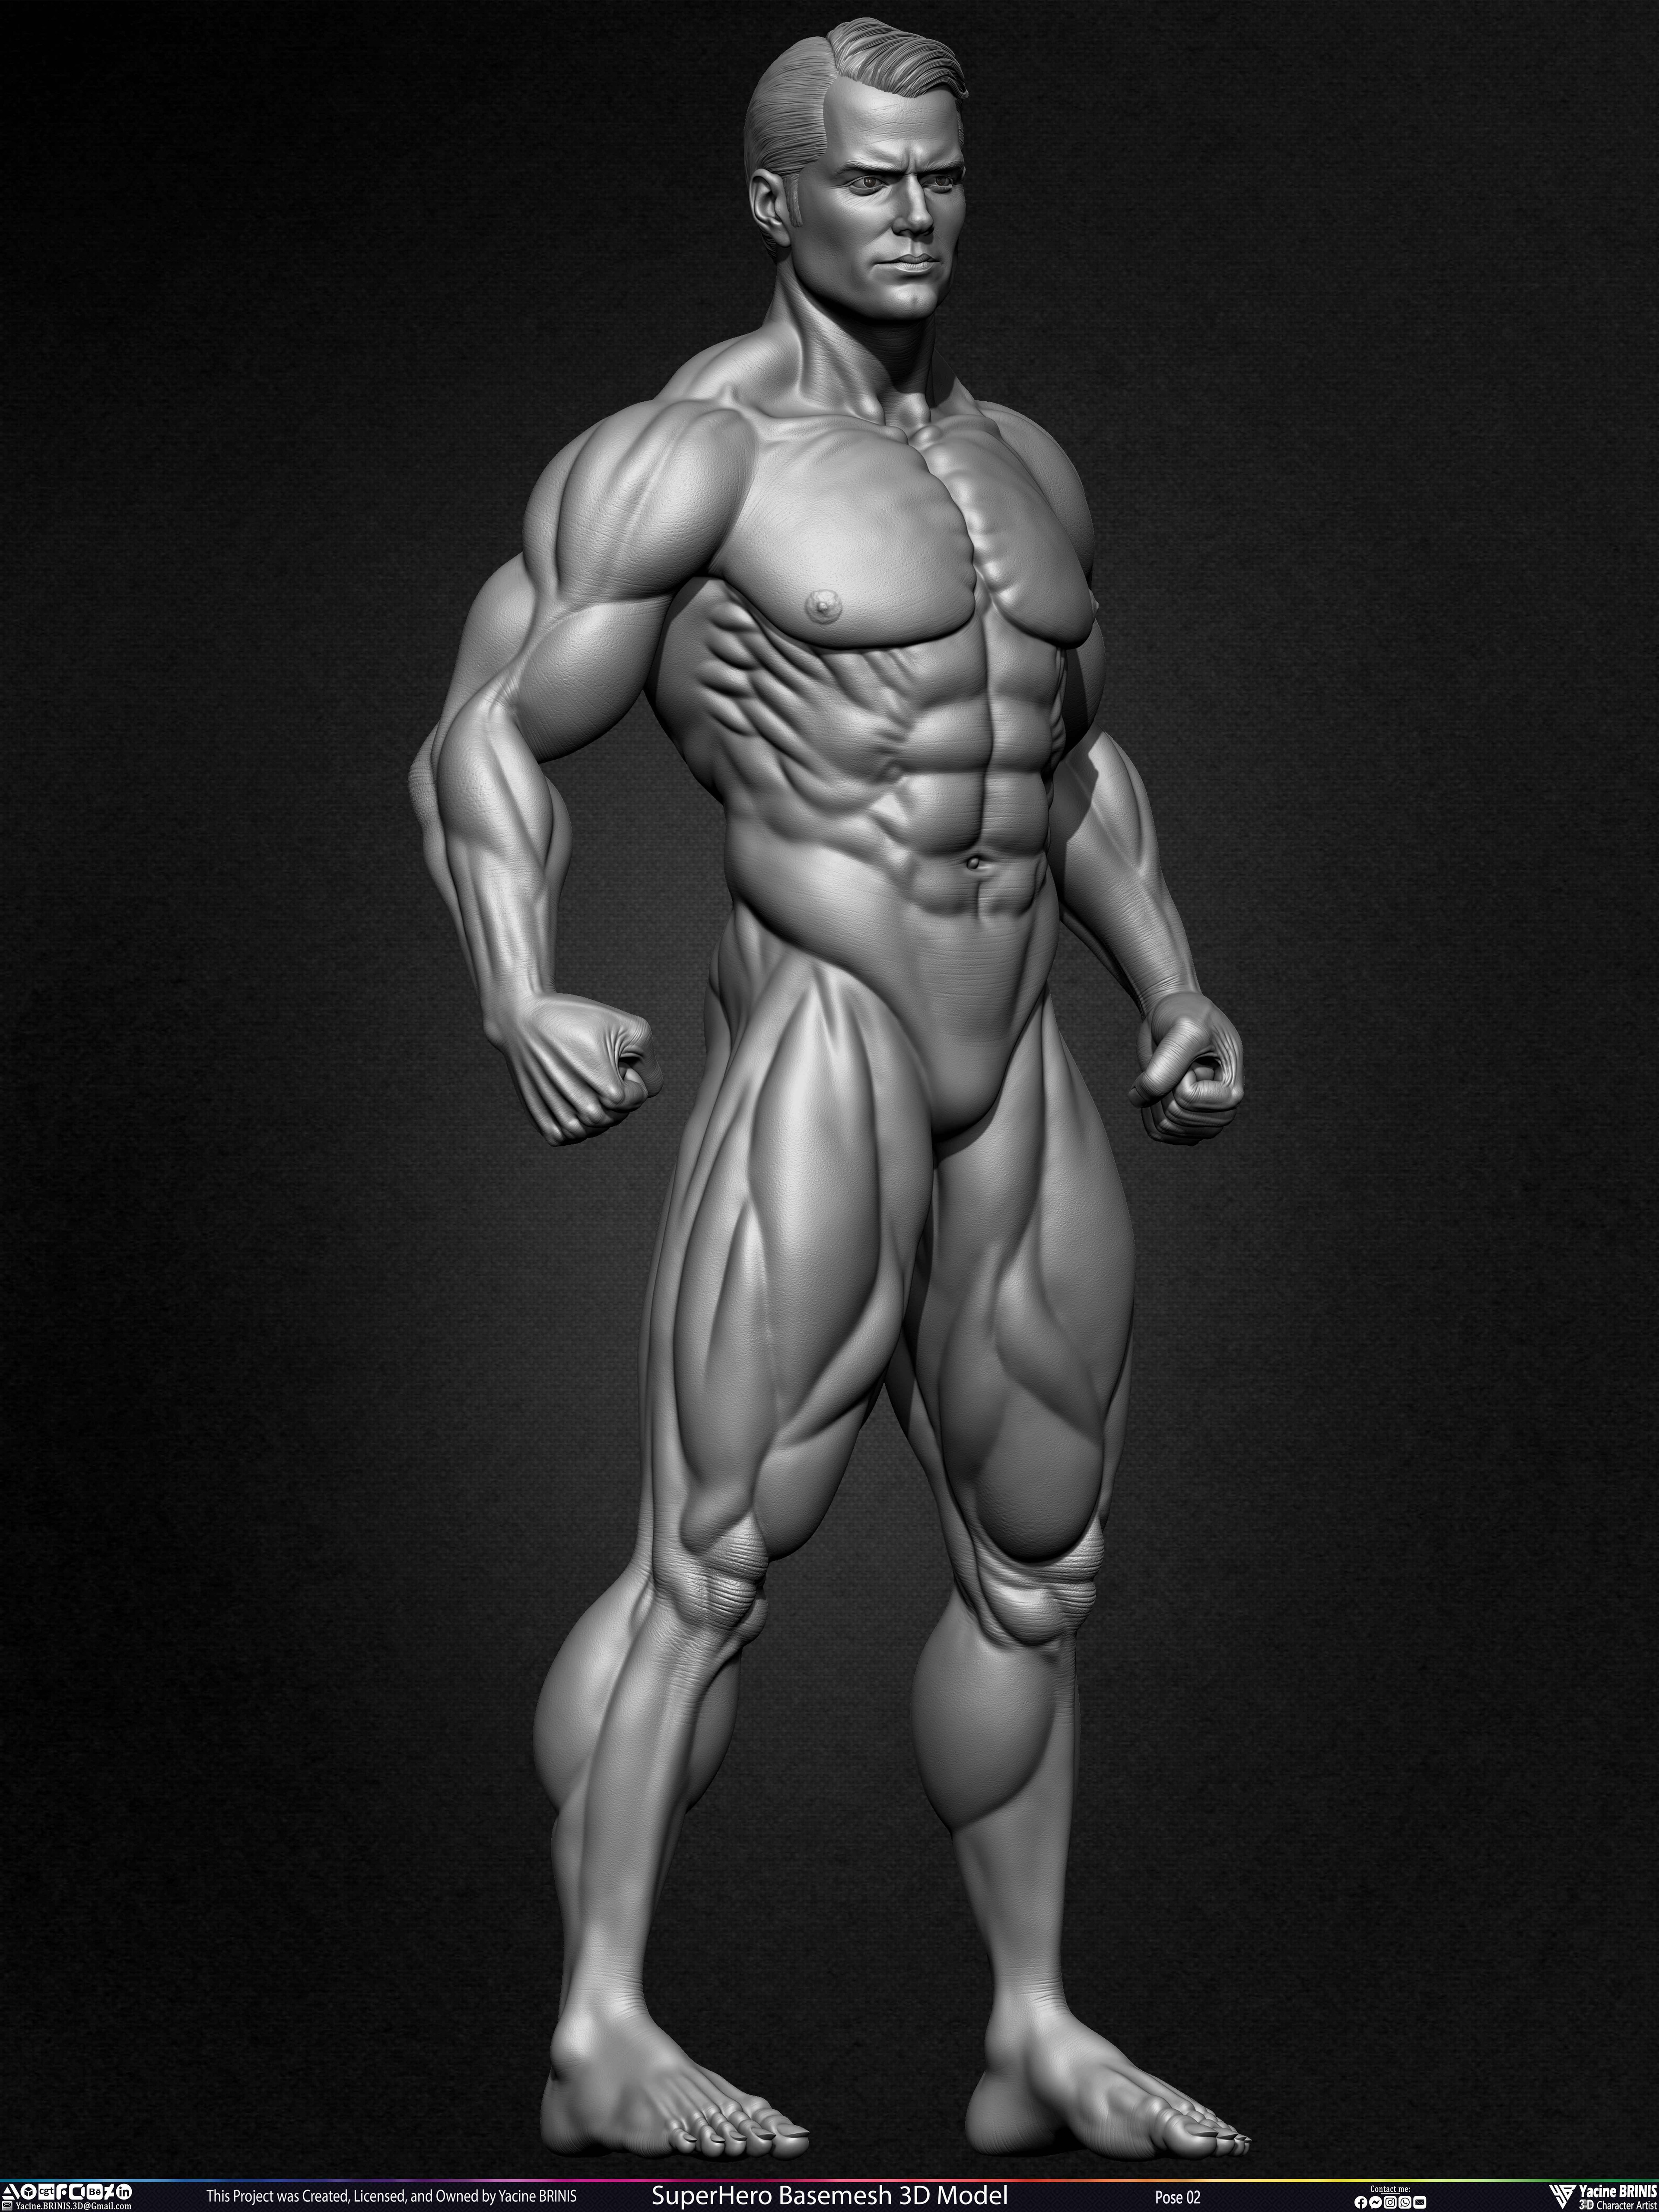 Super-Hero Basemesh 3D Model - Henry Cavill- Man of Steel - Superman - Pose 02 Sculpted by Yacine BRINIS Set 005